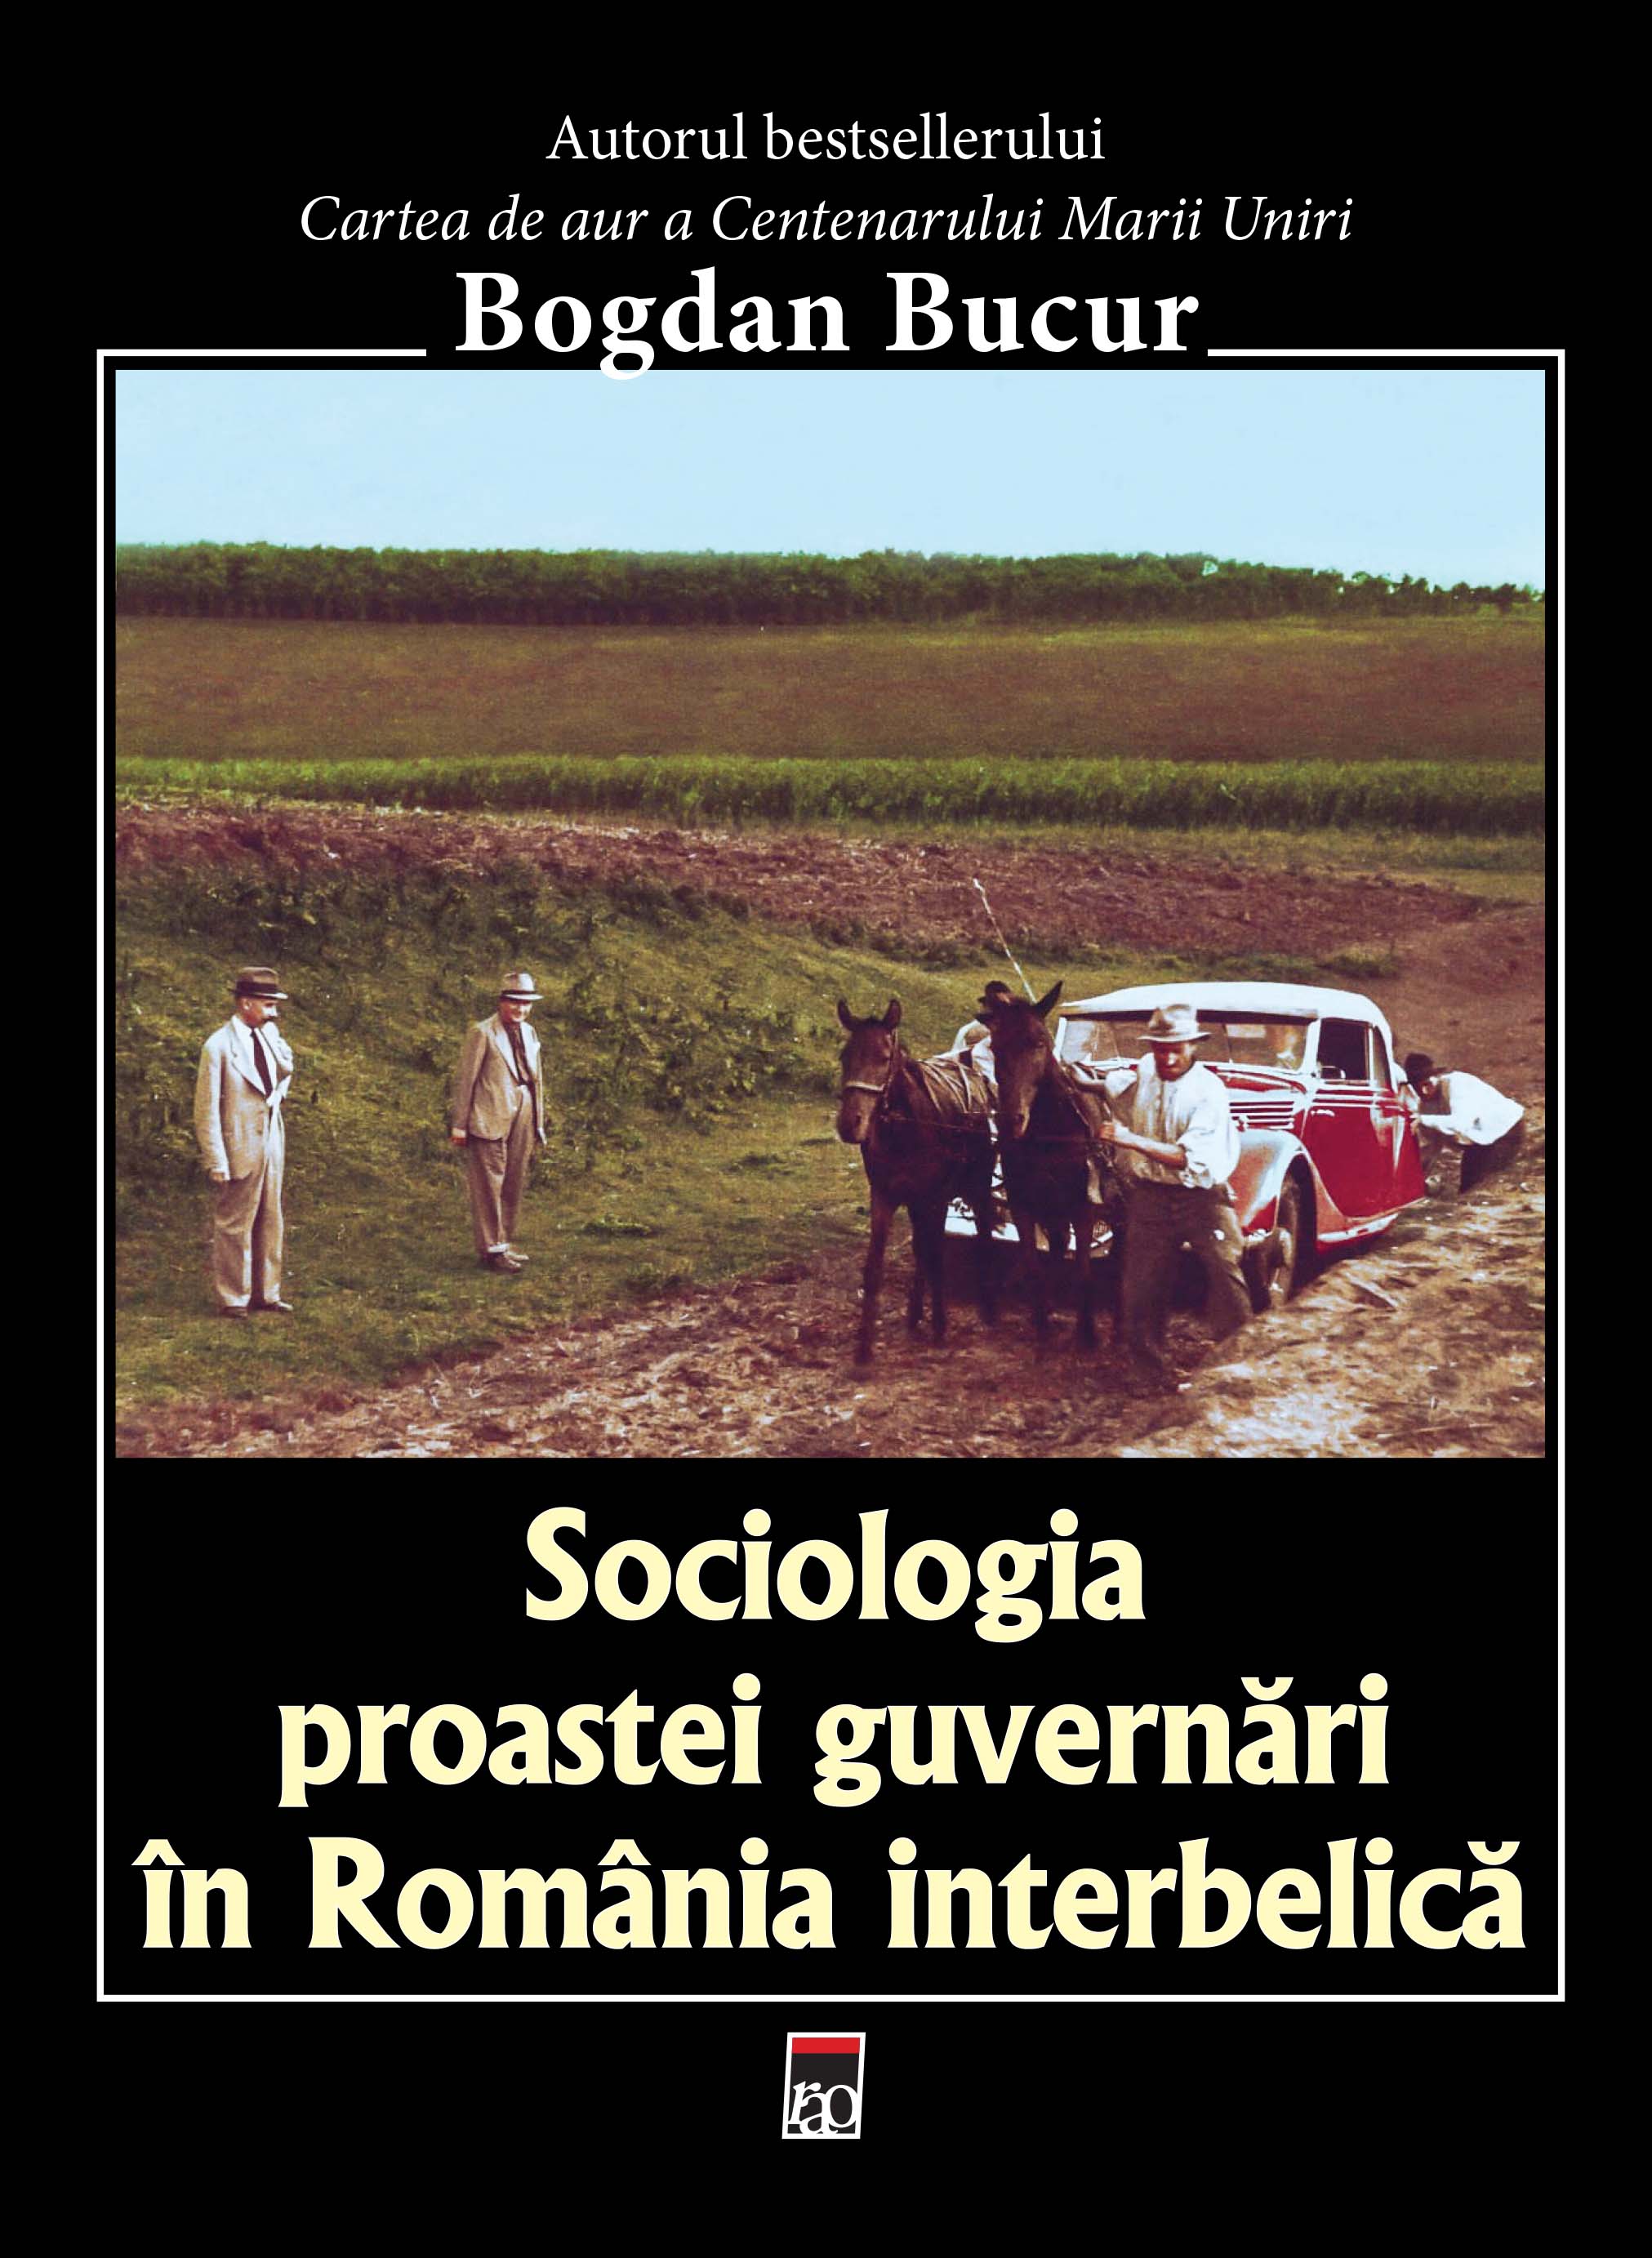 Sociologia proastei guvernari in Romania interbelica | Bogdan Bucur carturesti.ro poza bestsellers.ro